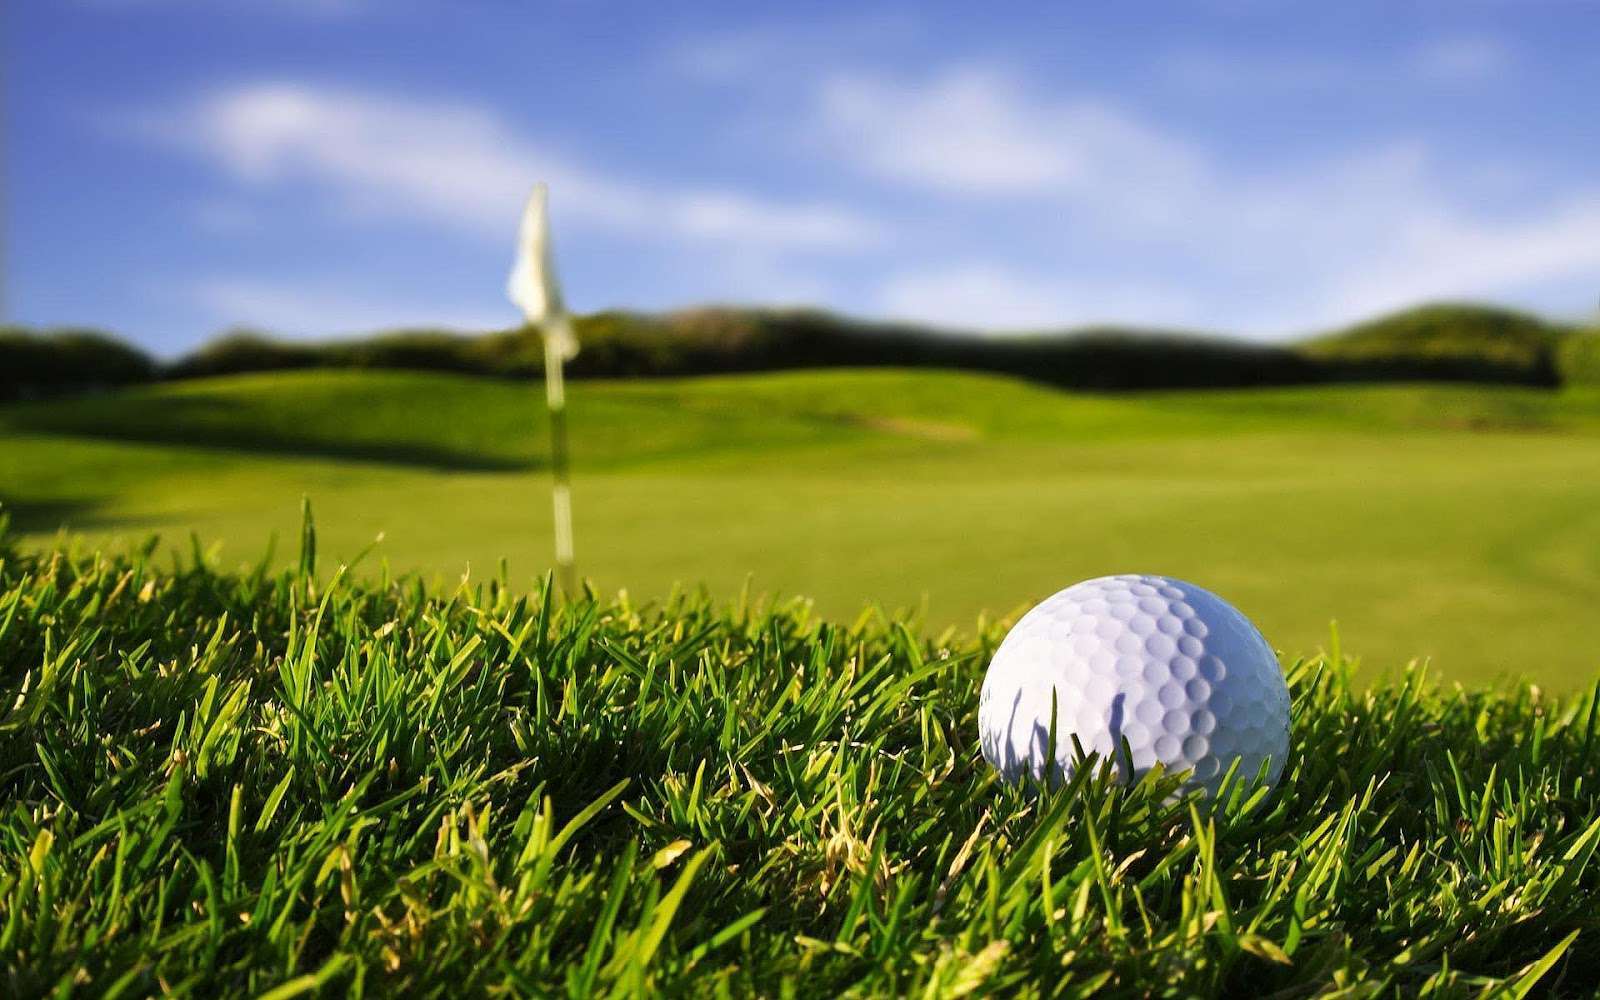 Best-top-desktop-golf-wallpapers-hd-golf-wallpaper-sport-pictures-02-download.jpeg